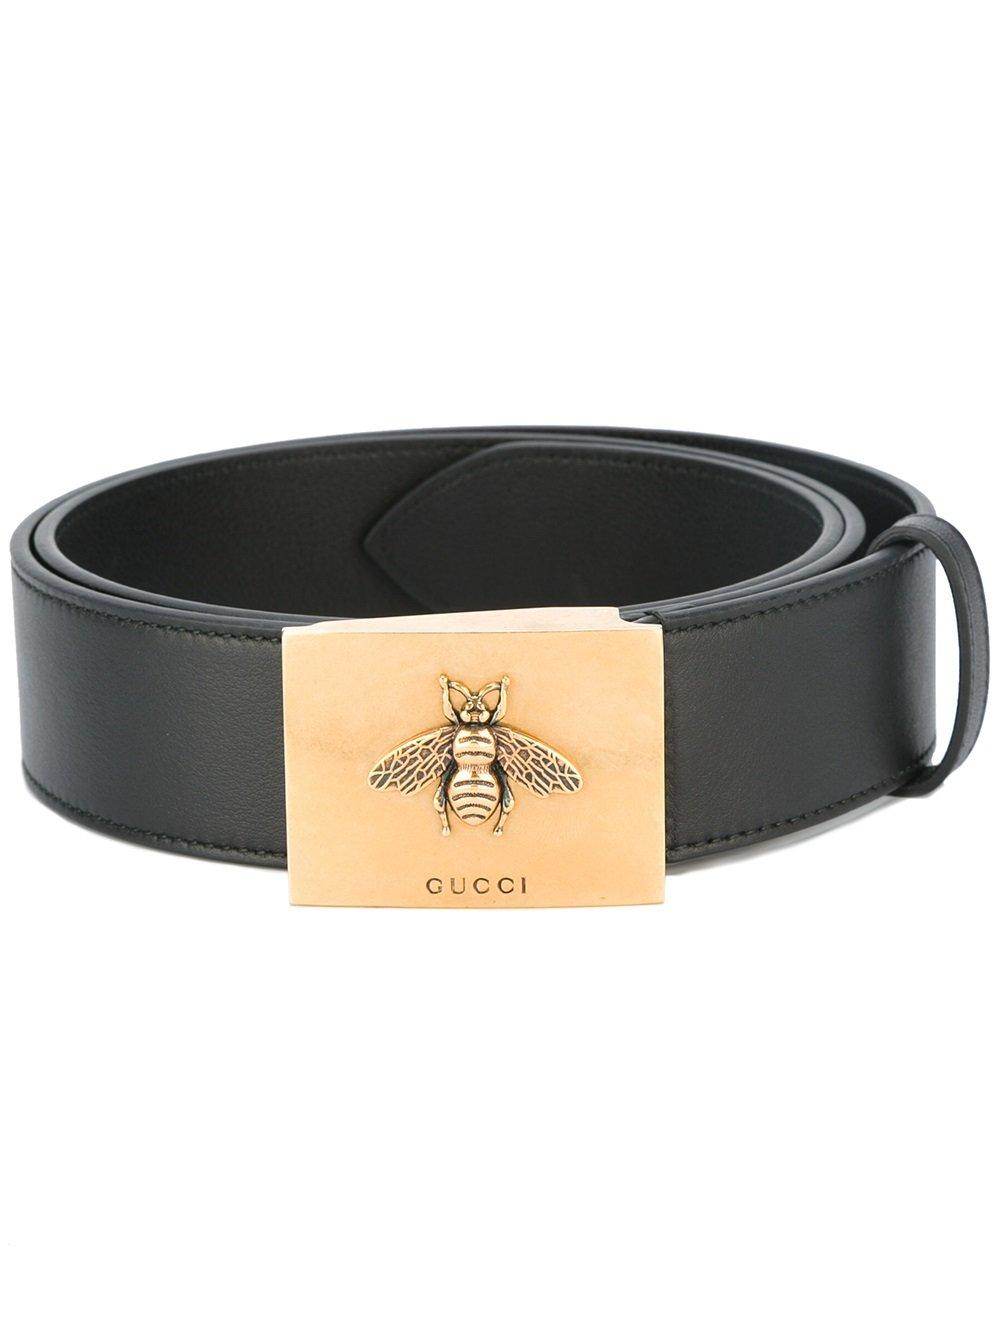 Lyst - Gucci Bee Buckle Belt in Black for Men